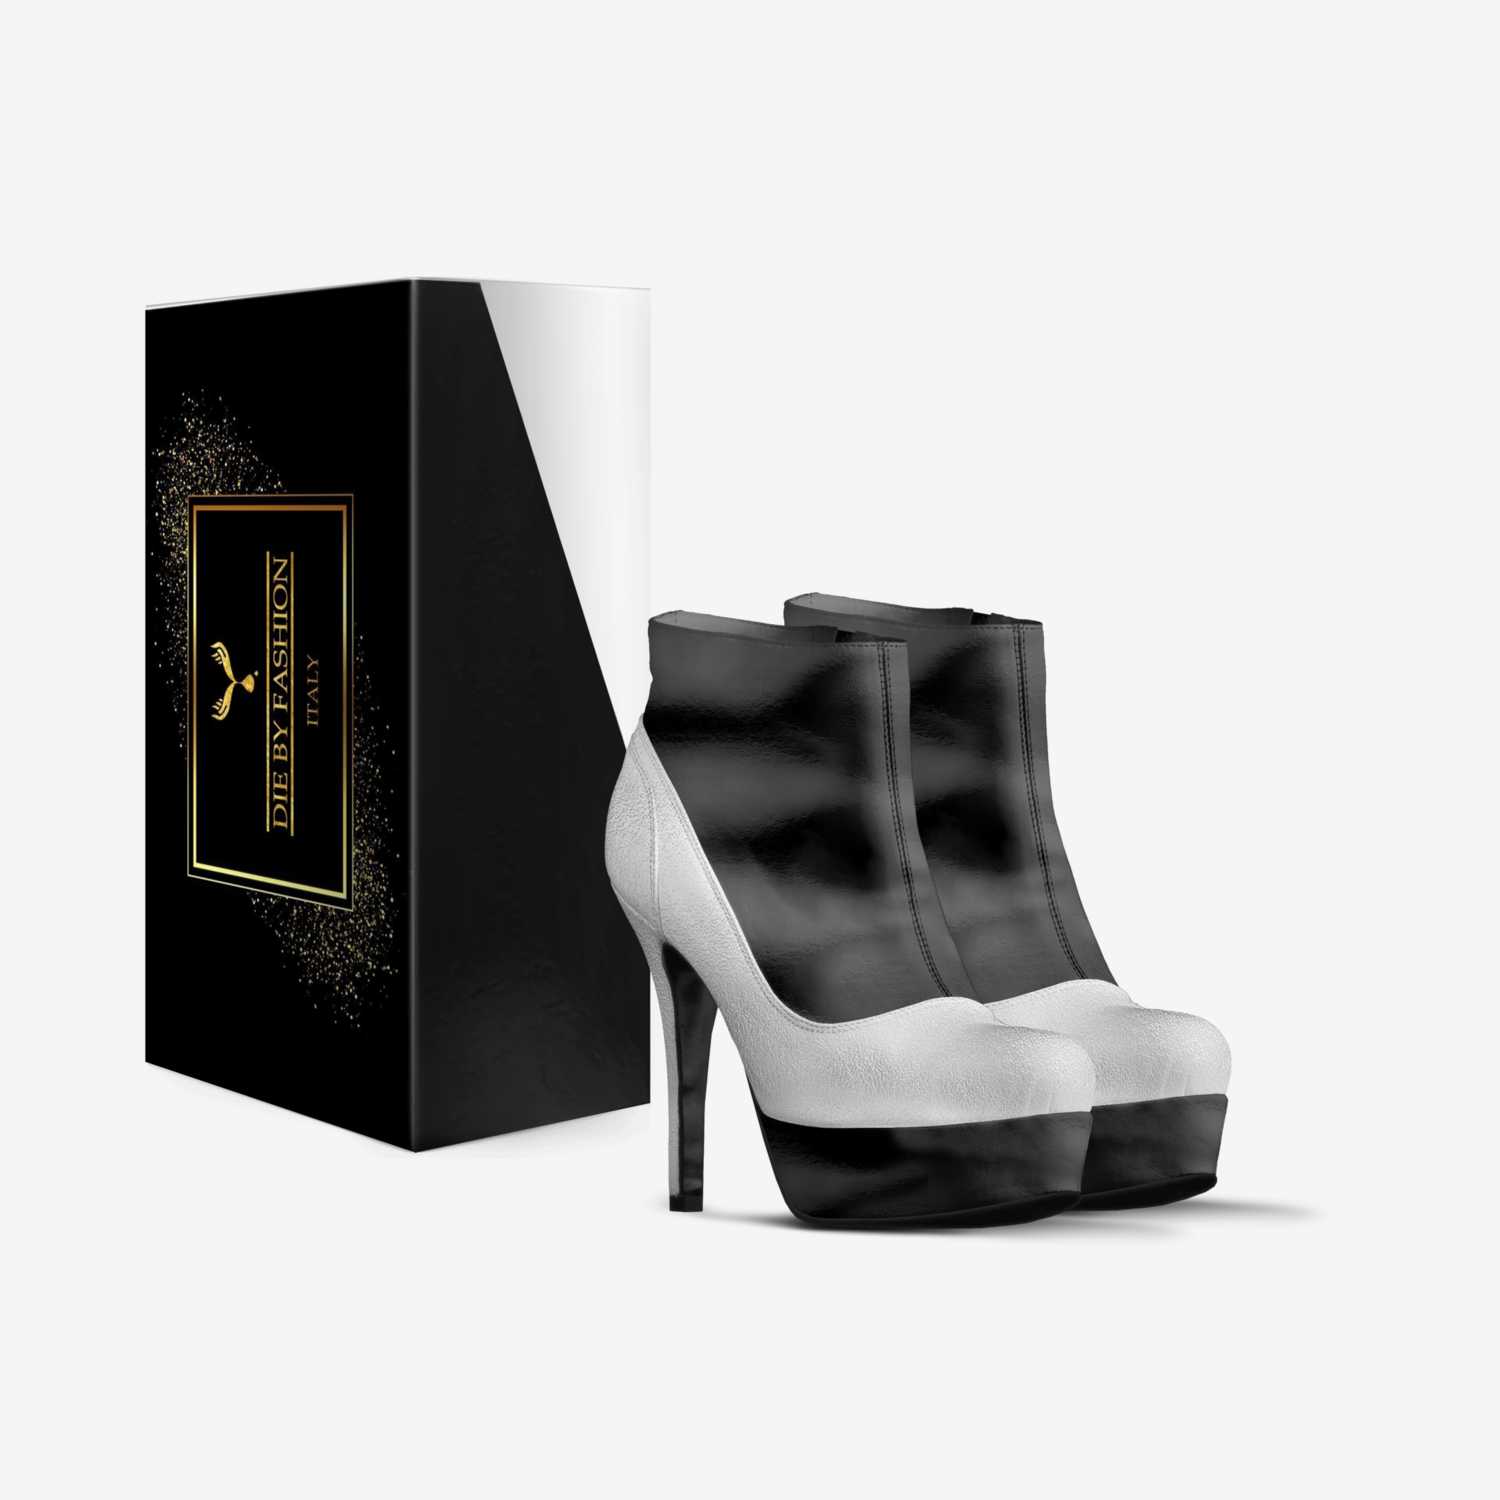 Bad Mothers custom made in Italy shoes by Rasheeda Socolove | Box view